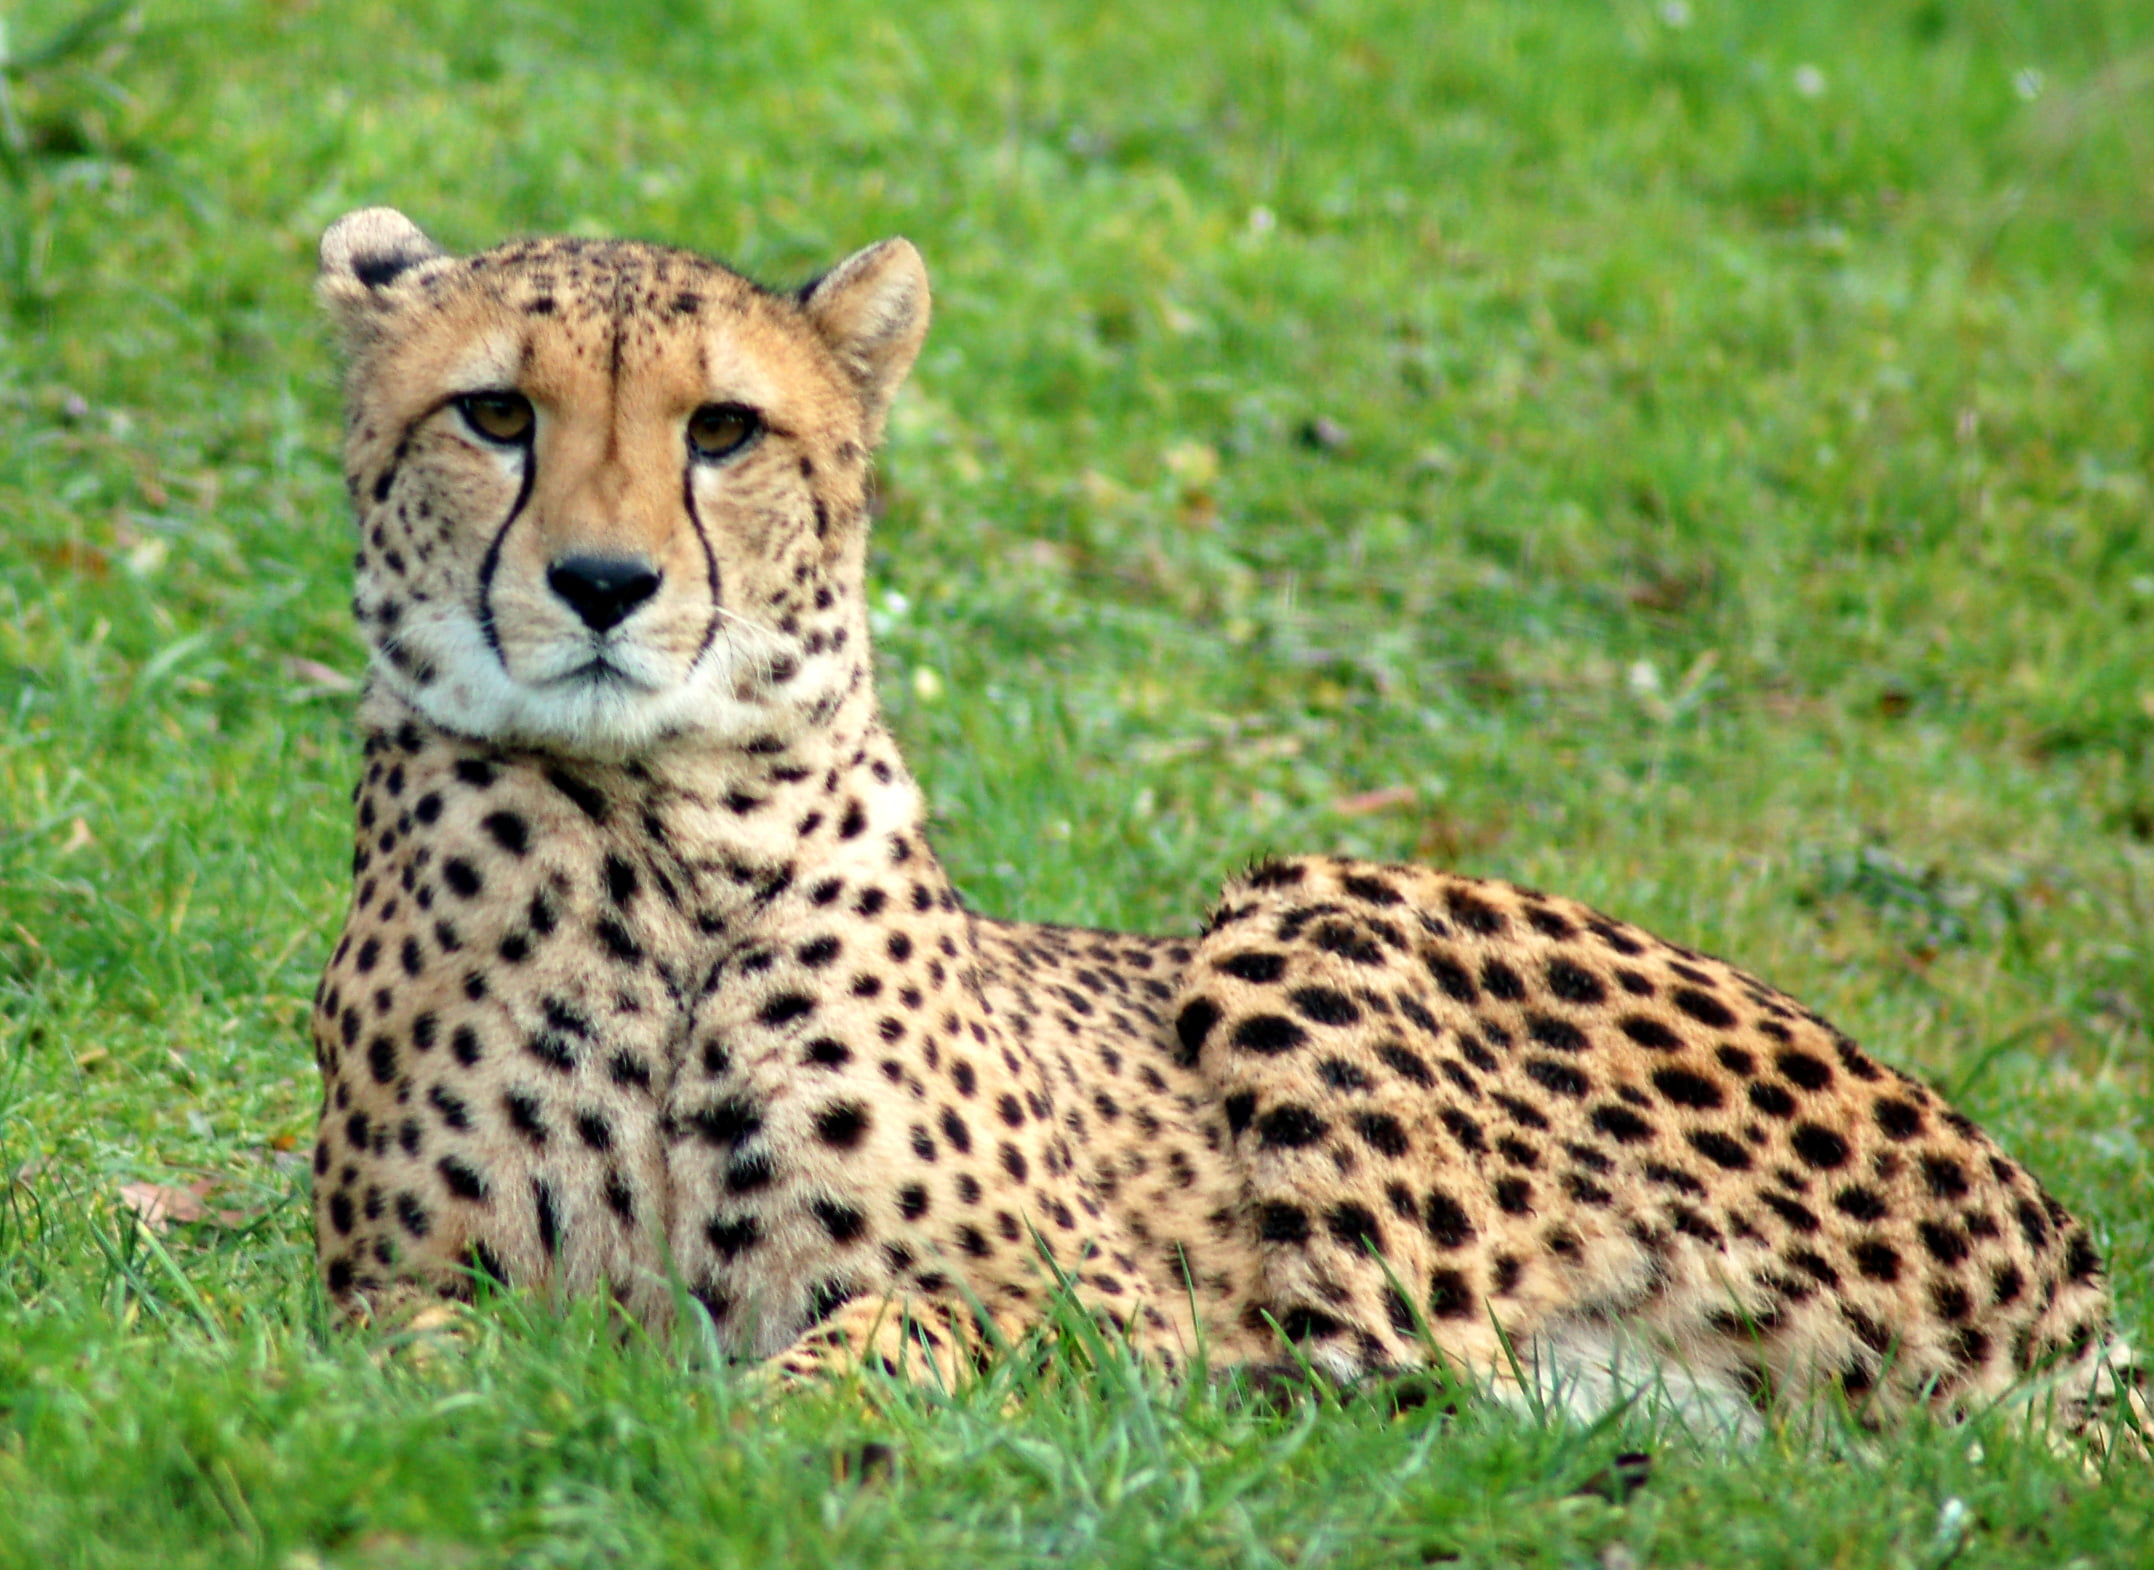 Cheetah on green grass, Tierpark, Aachen, Deutschland, Germany